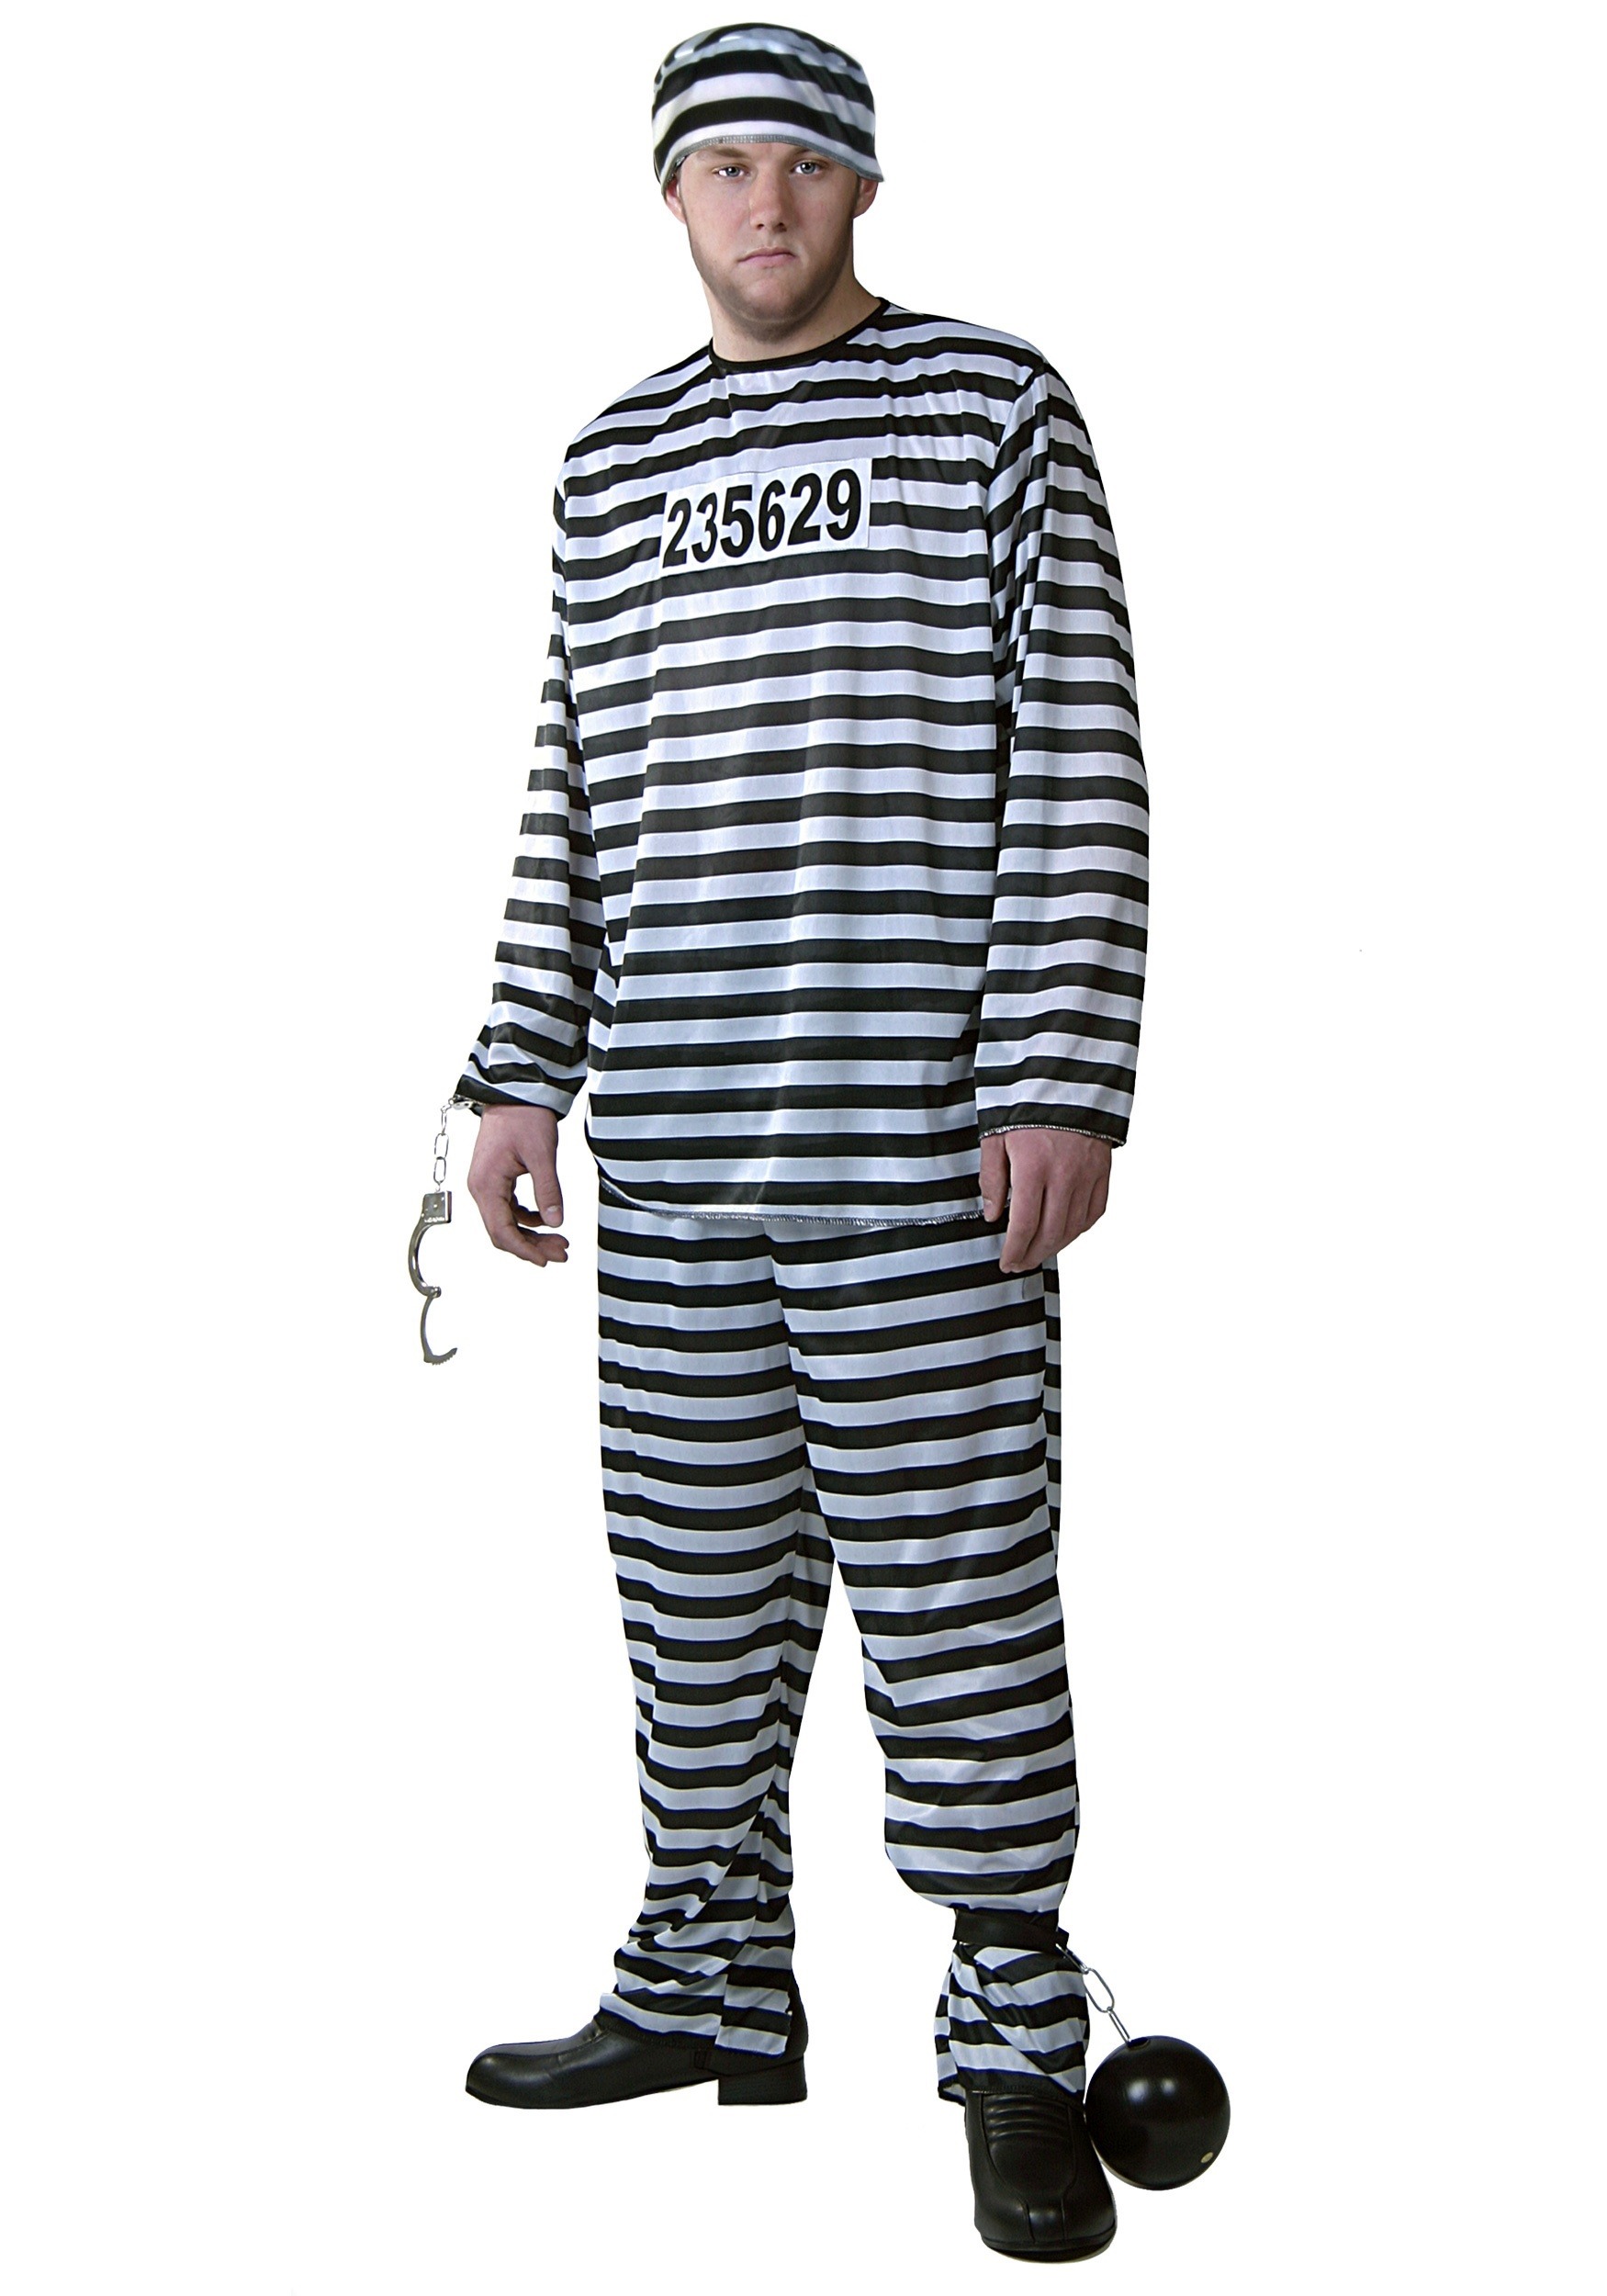 Plus Size Prisoner Costume for Men | Jailbird Halloween Costume